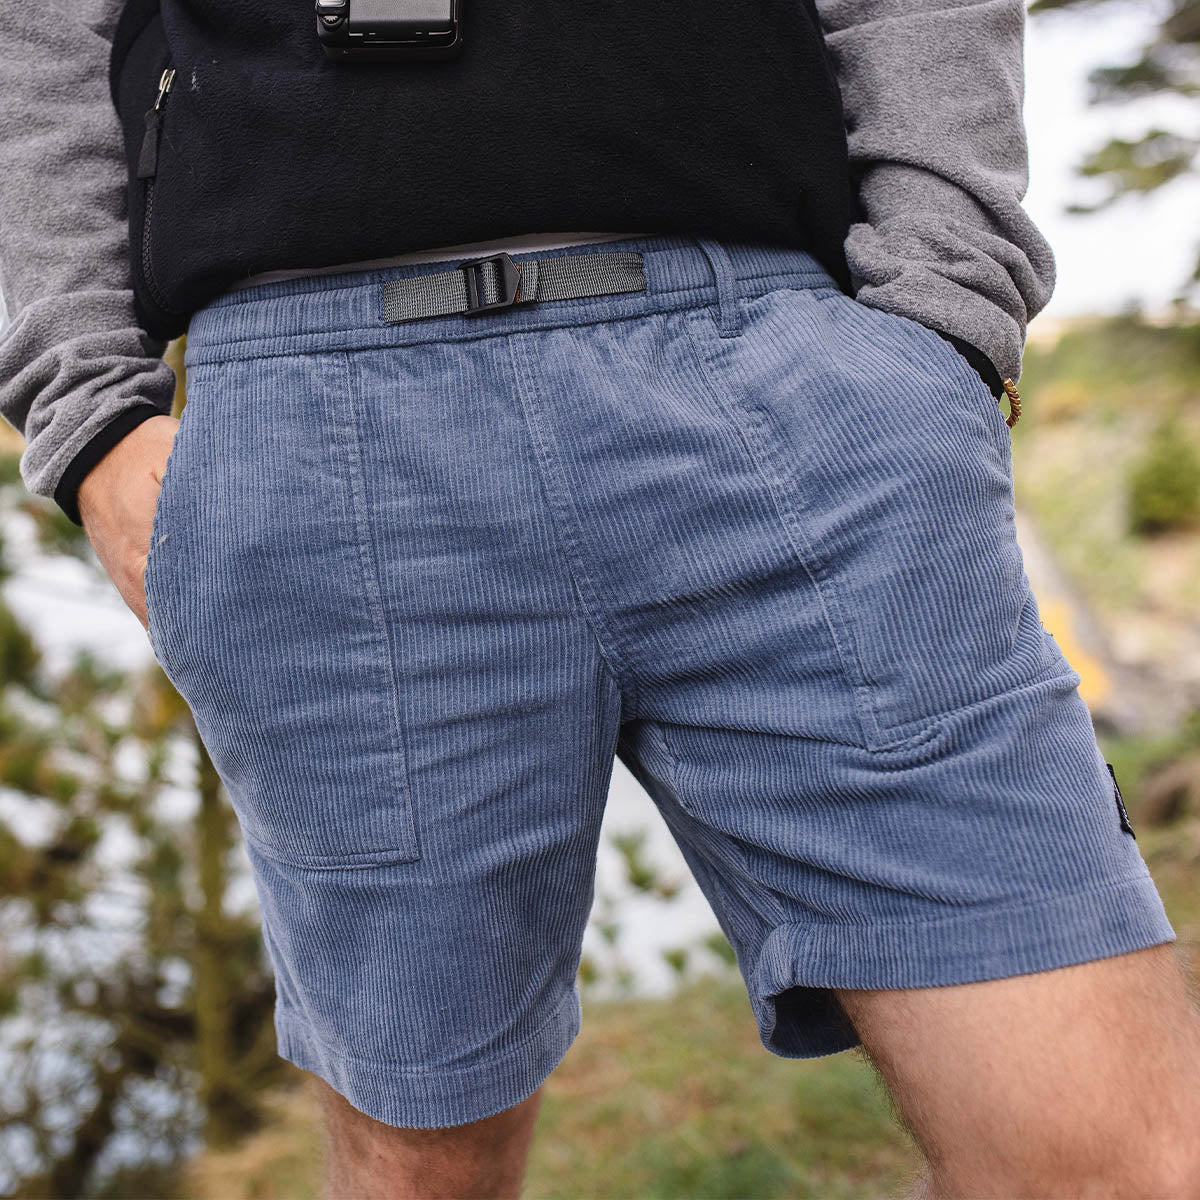 Topanga Recycled Cord Shorts - Stone Blue